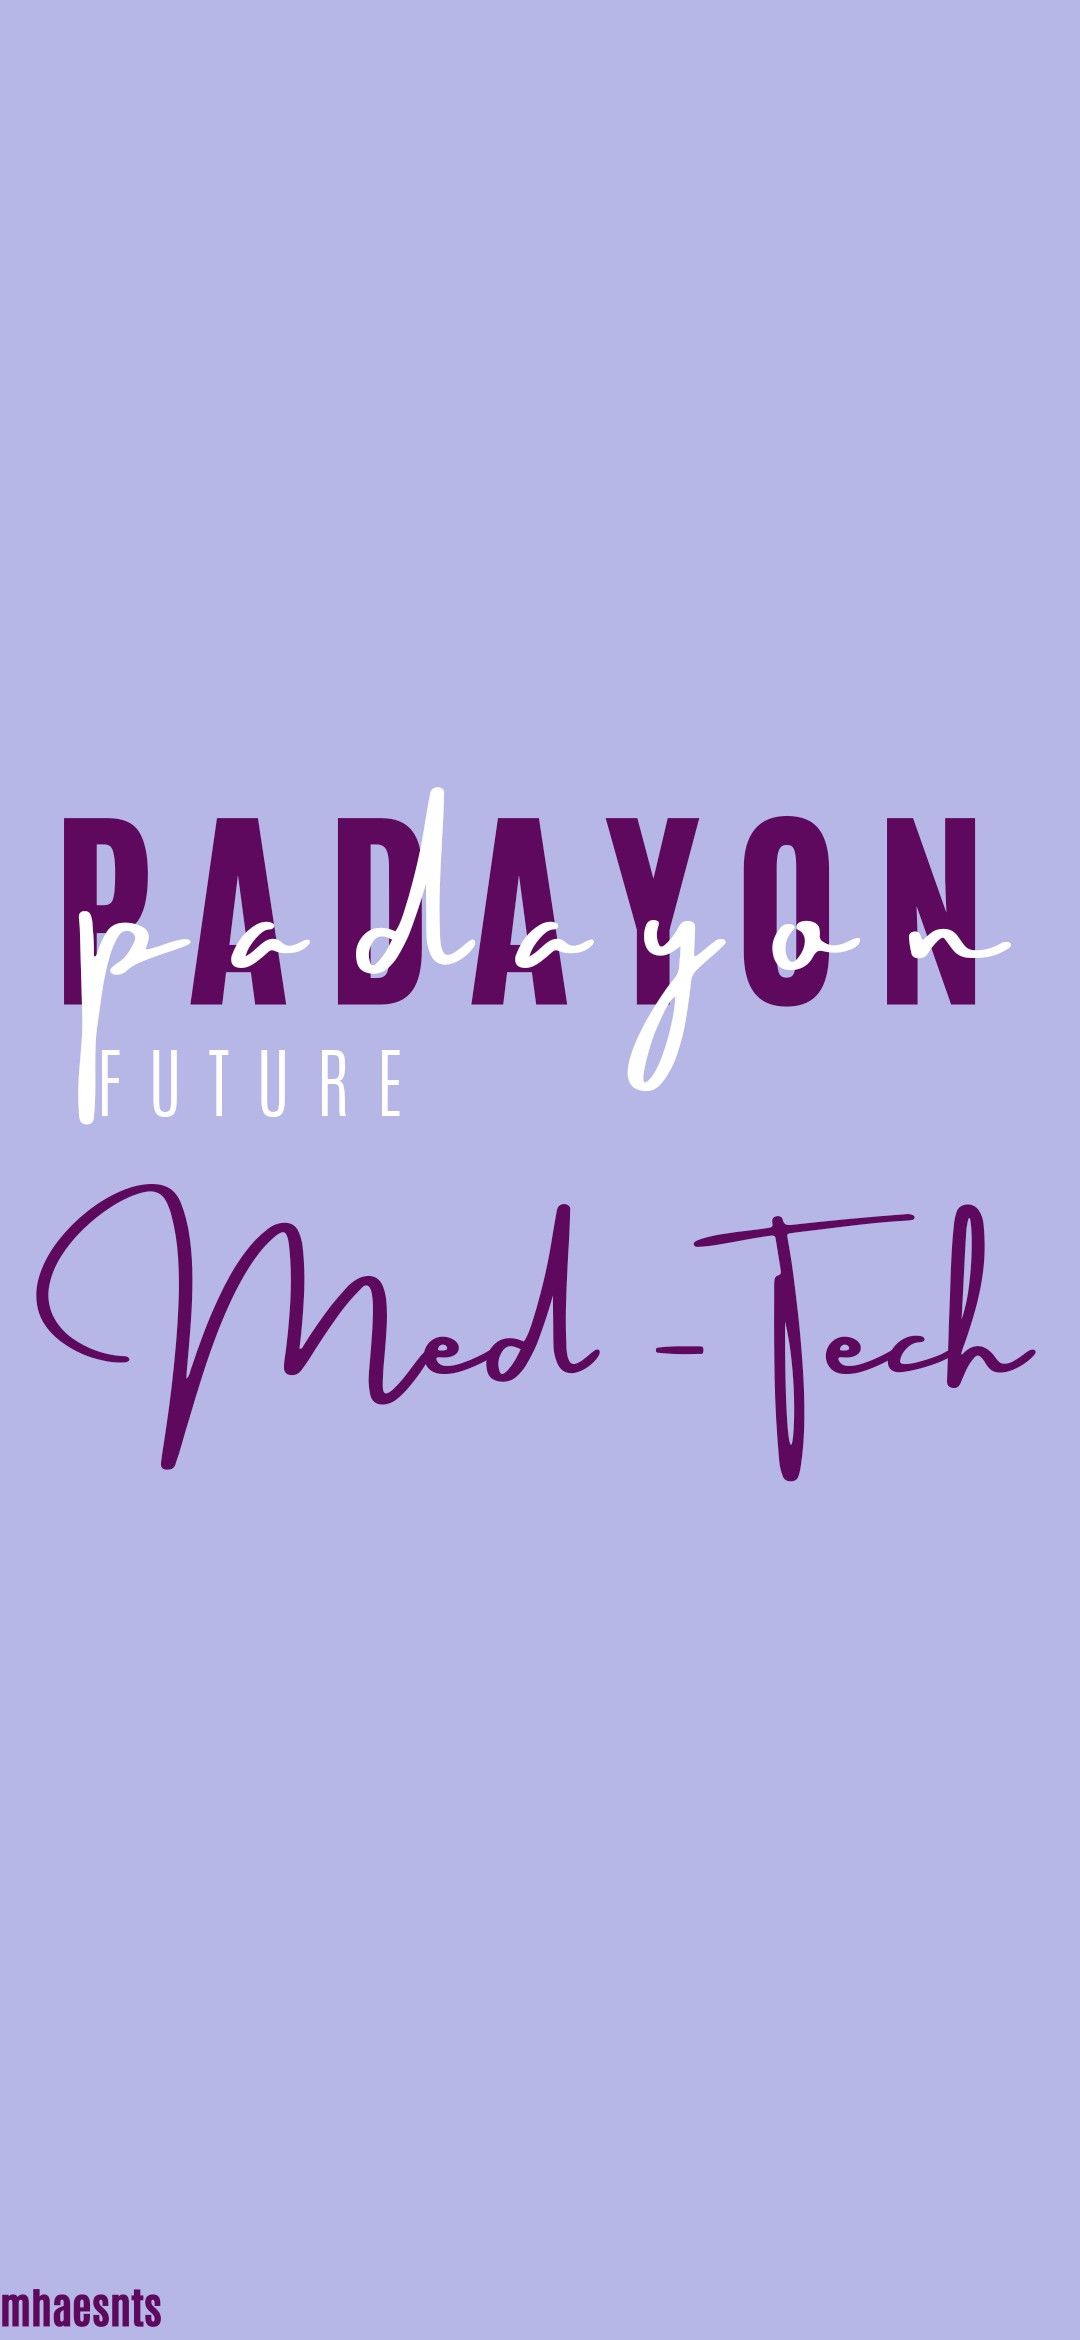 Padayon!!! Future Med Tech. Engineering student, Med tech, Future wallpaper